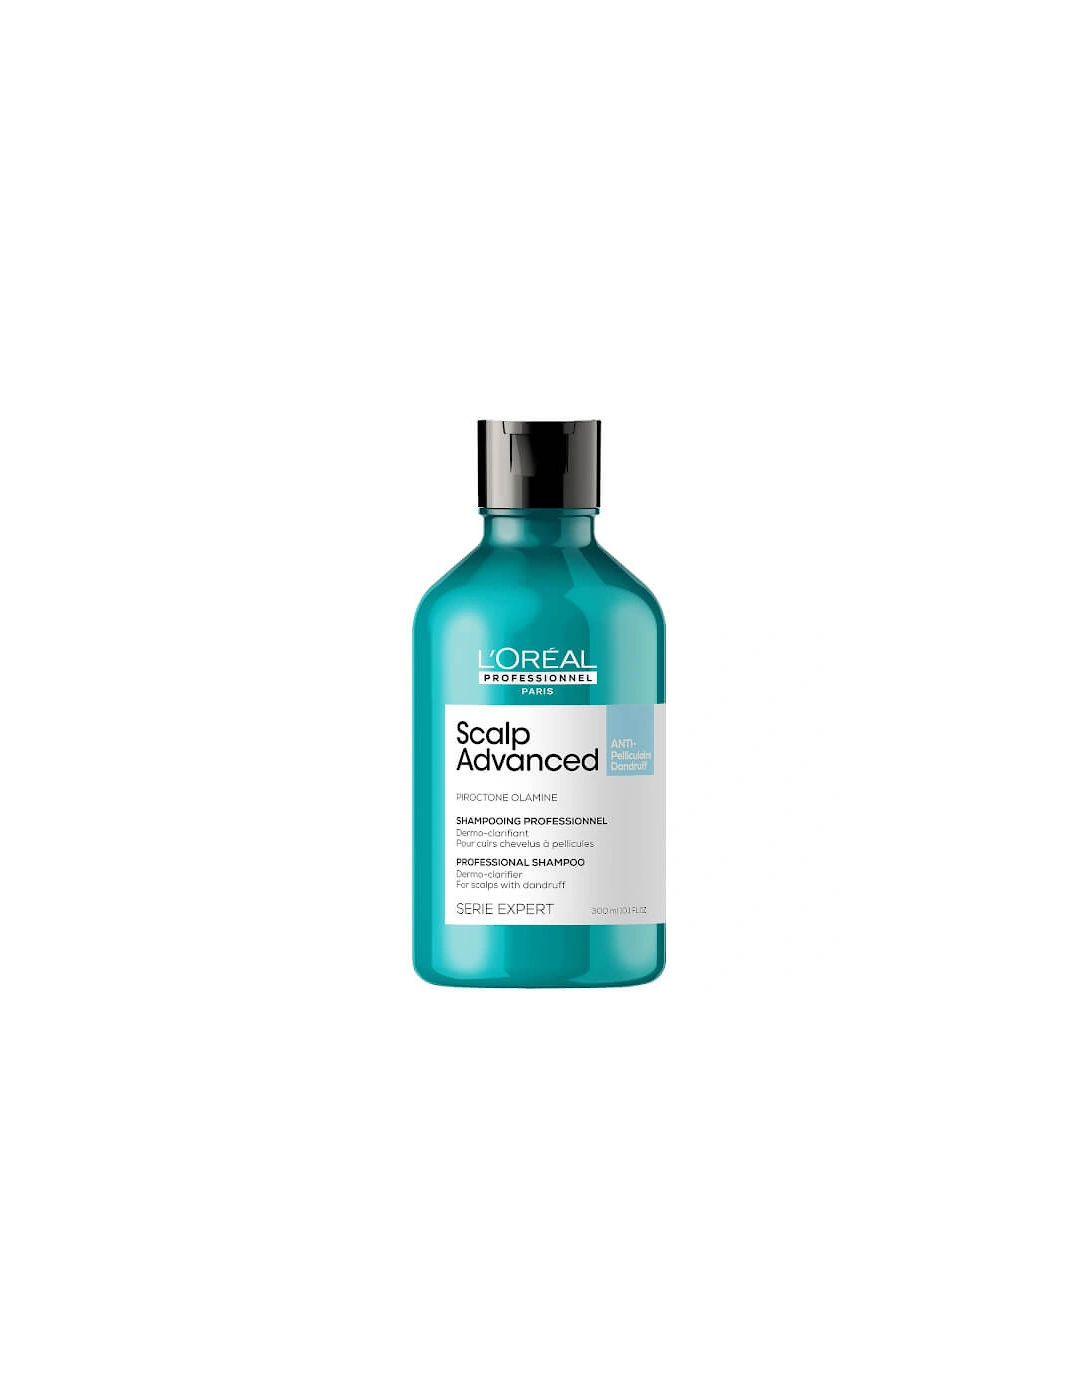 Professionnel Serié Expert Scalp Advanced Anti-Dandruff Dermo-Clarifier Shampoo 300ml, 2 of 1